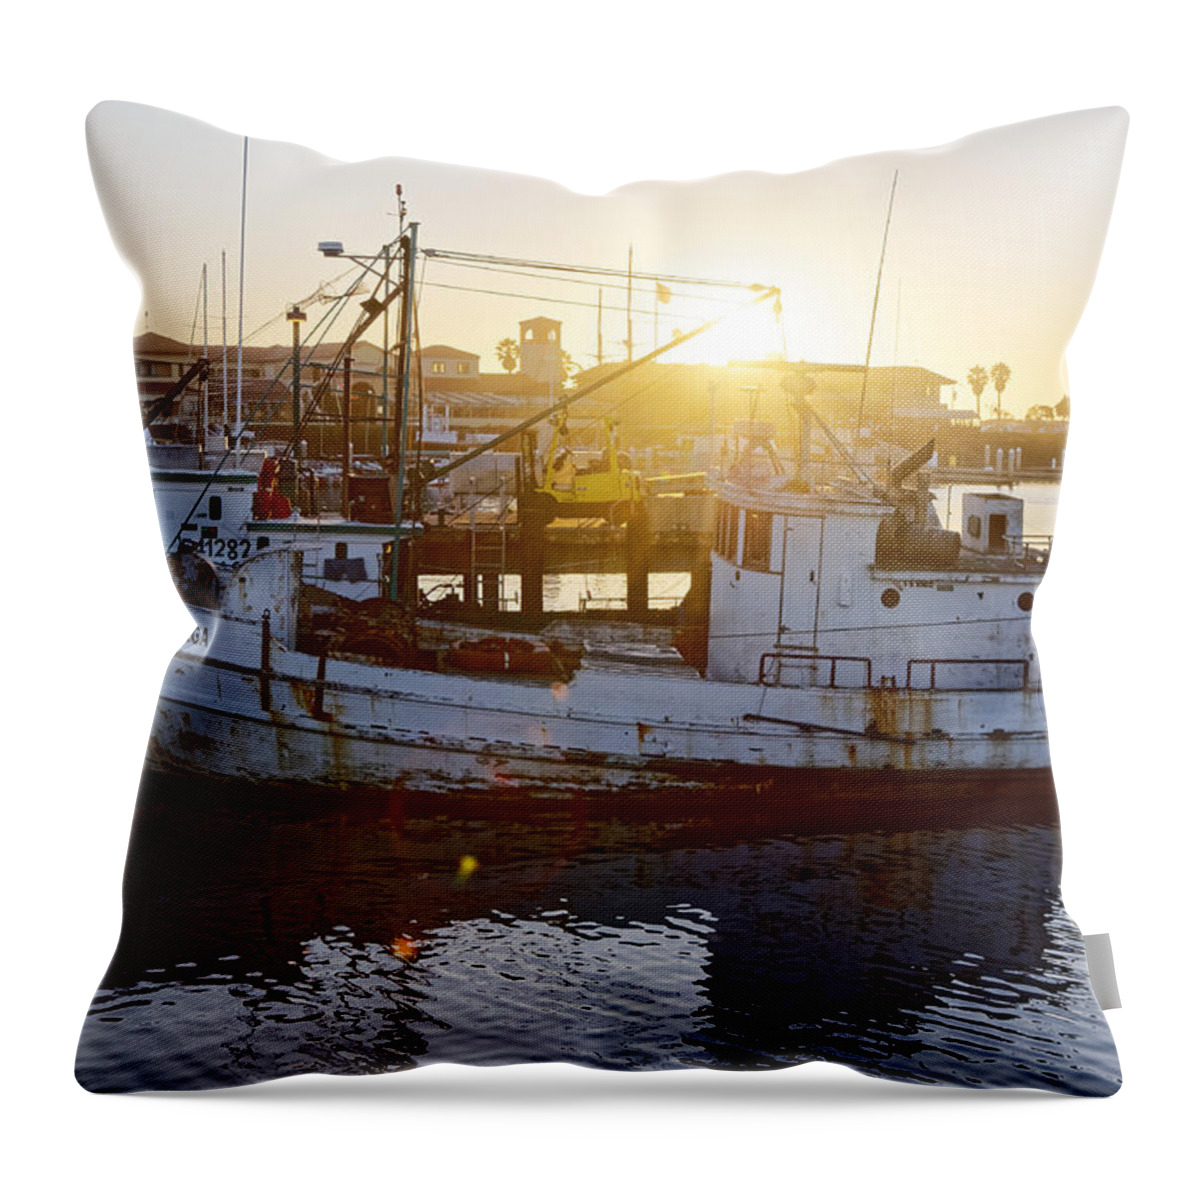 Darin Volpe Ships And Boats Throw Pillow featuring the photograph Lady Olga - Fishing Boat at Ventura, California by Darin Volpe